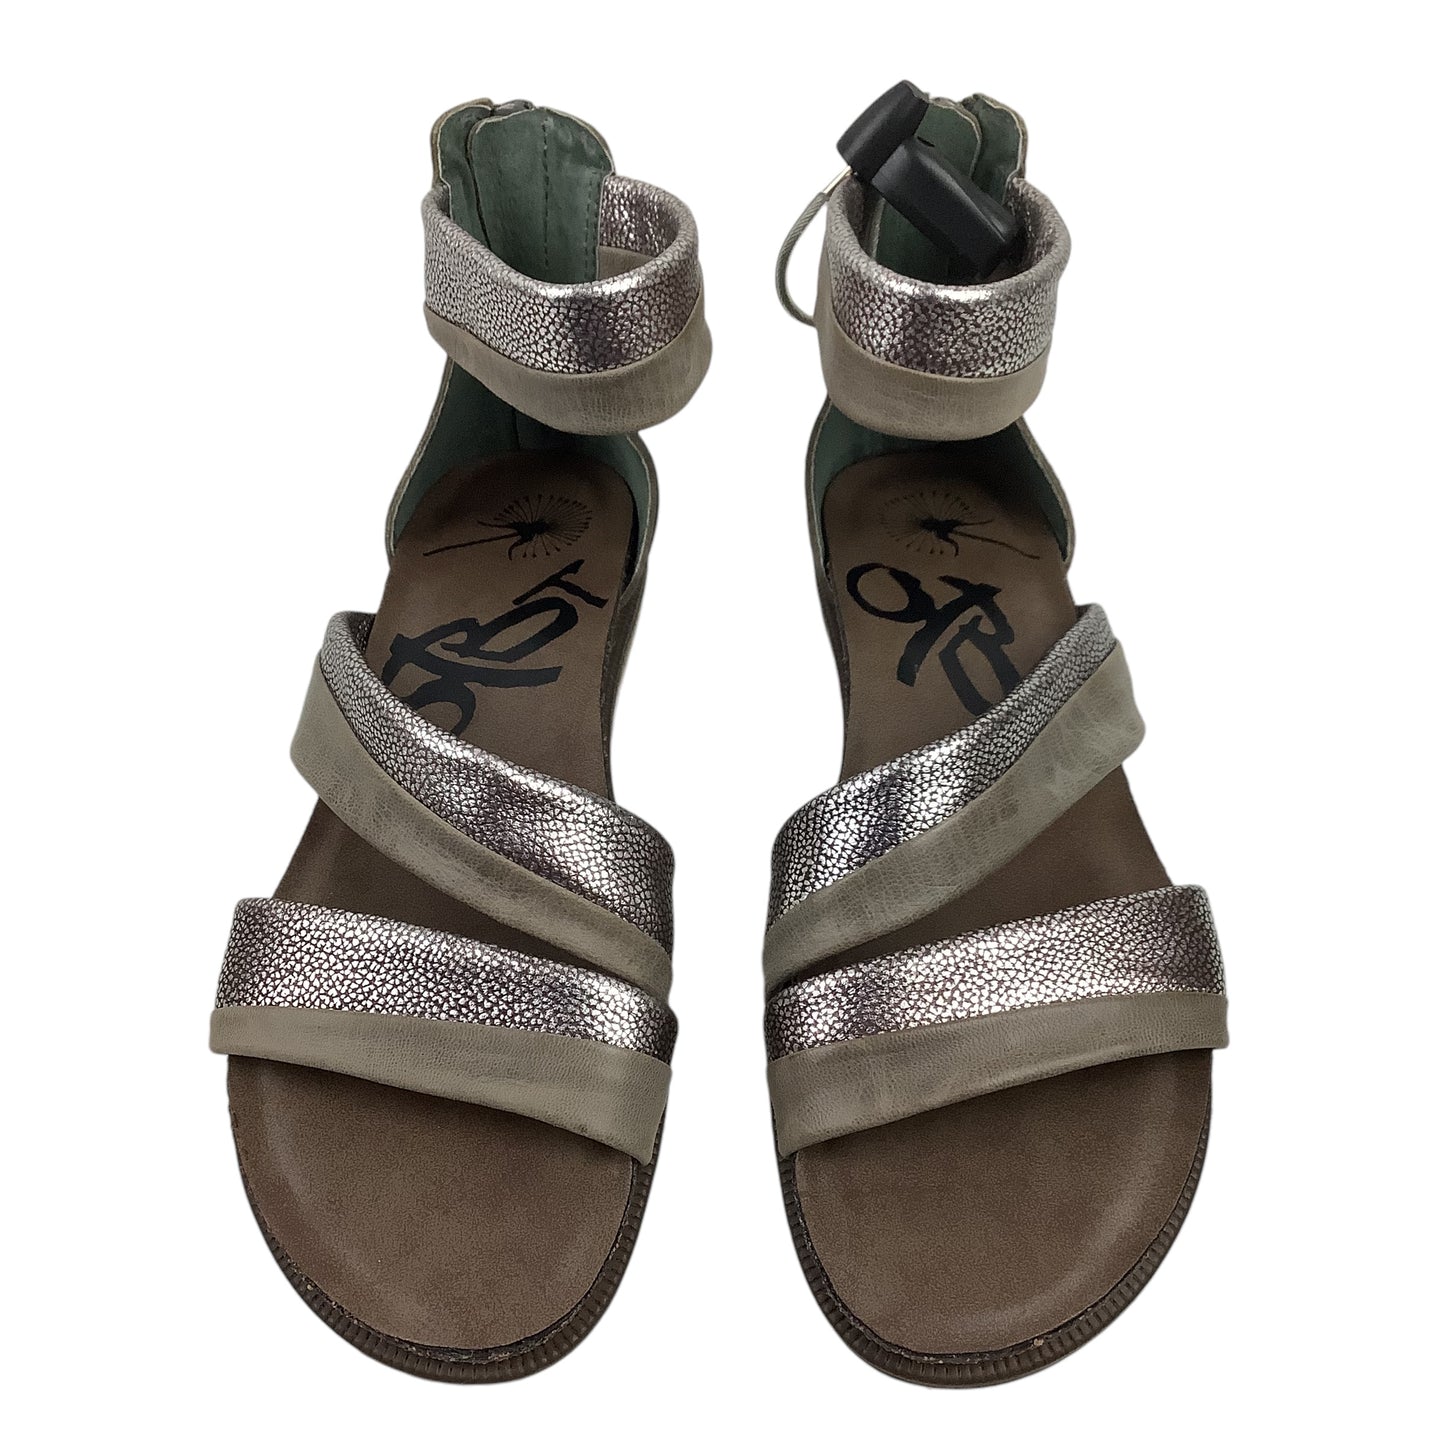 Sandals Flats By Otbt  Size: 7.5